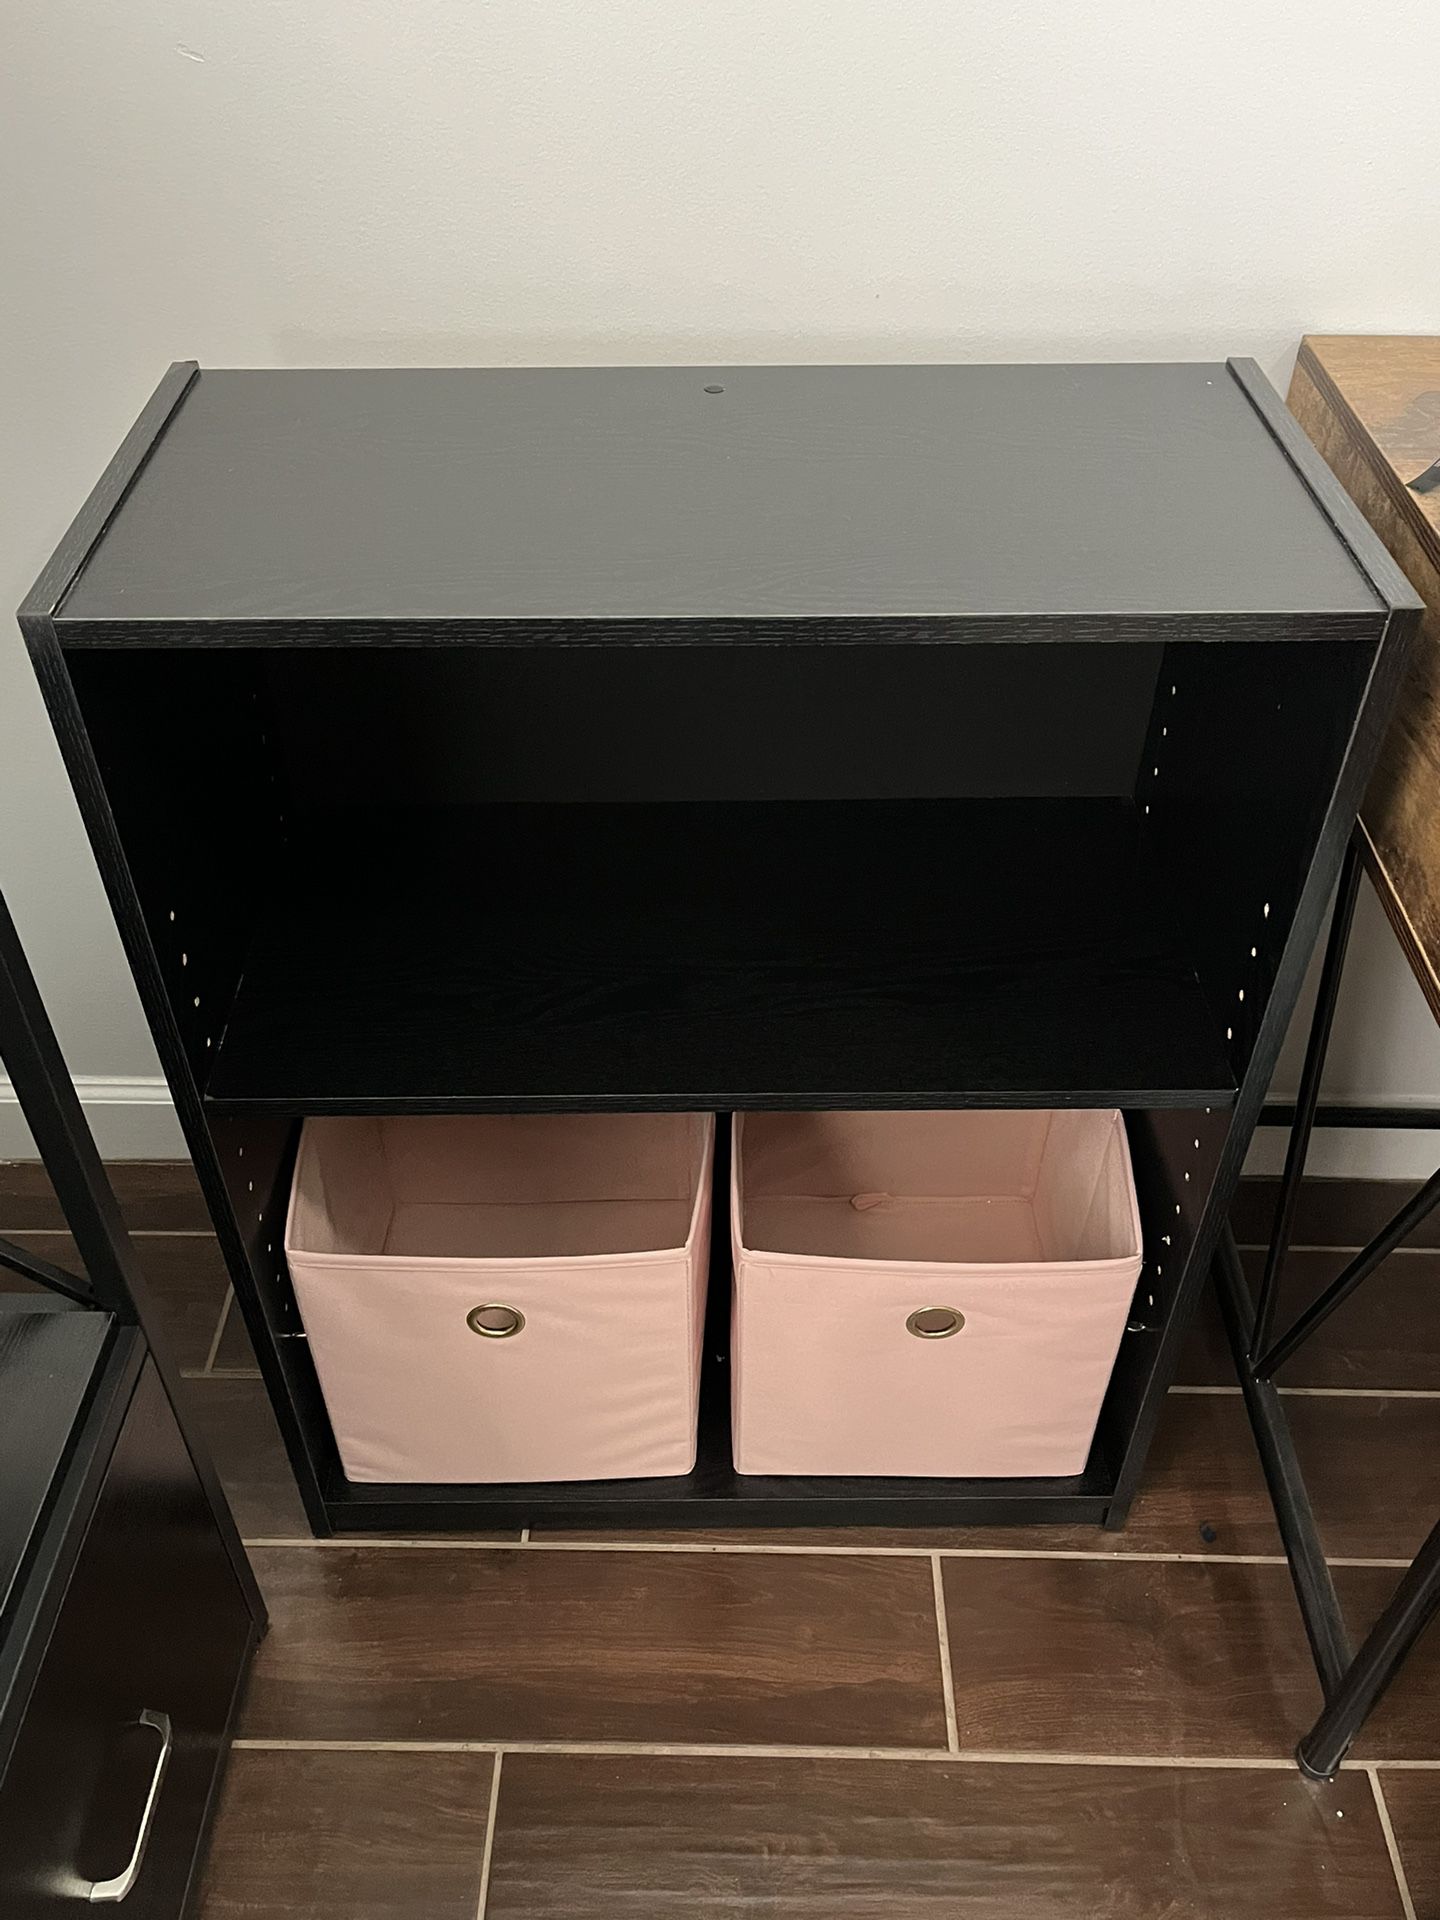 4 Cube Storage Organizer 